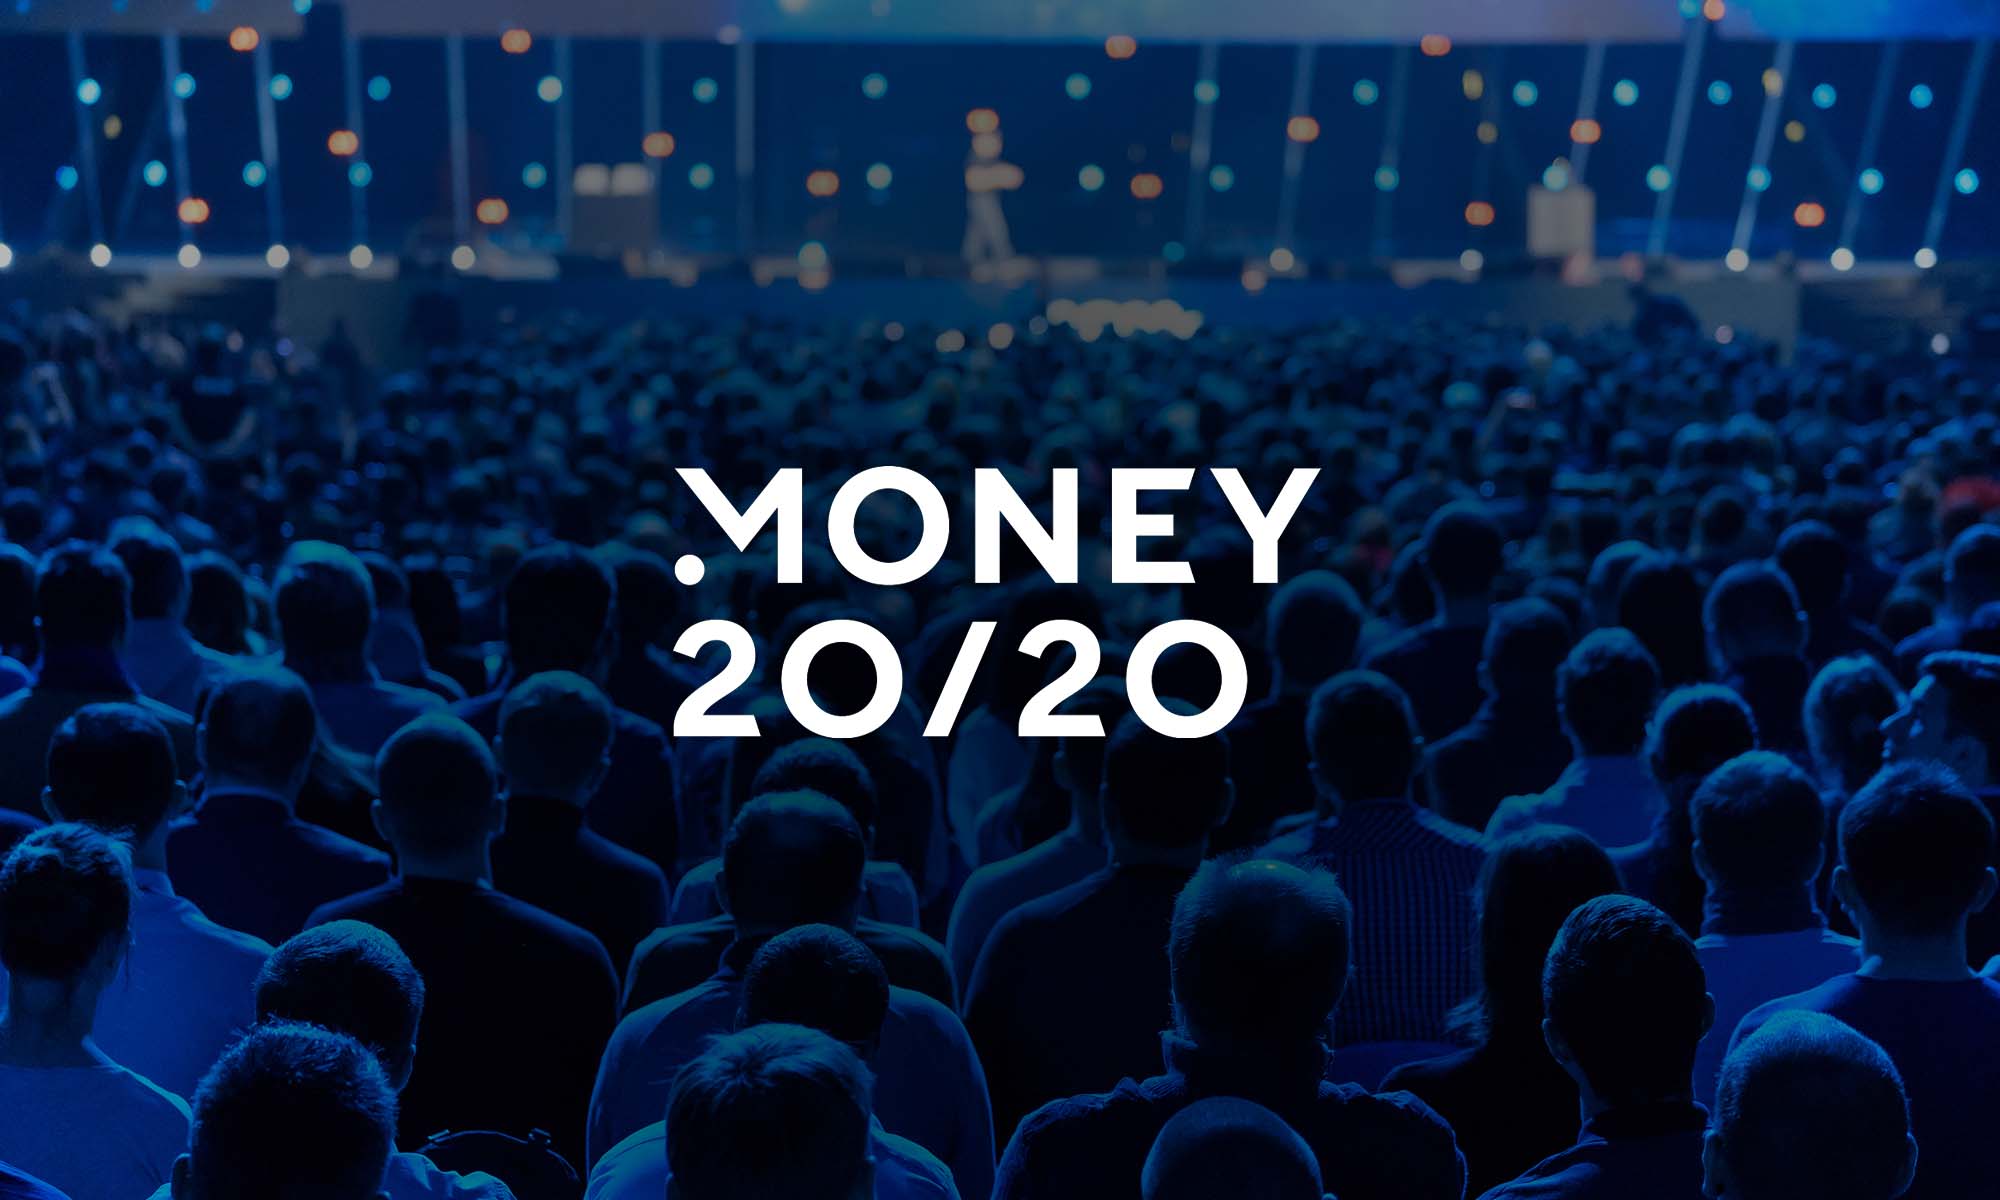 US developer Money20/20 event taking place in Las Vegas